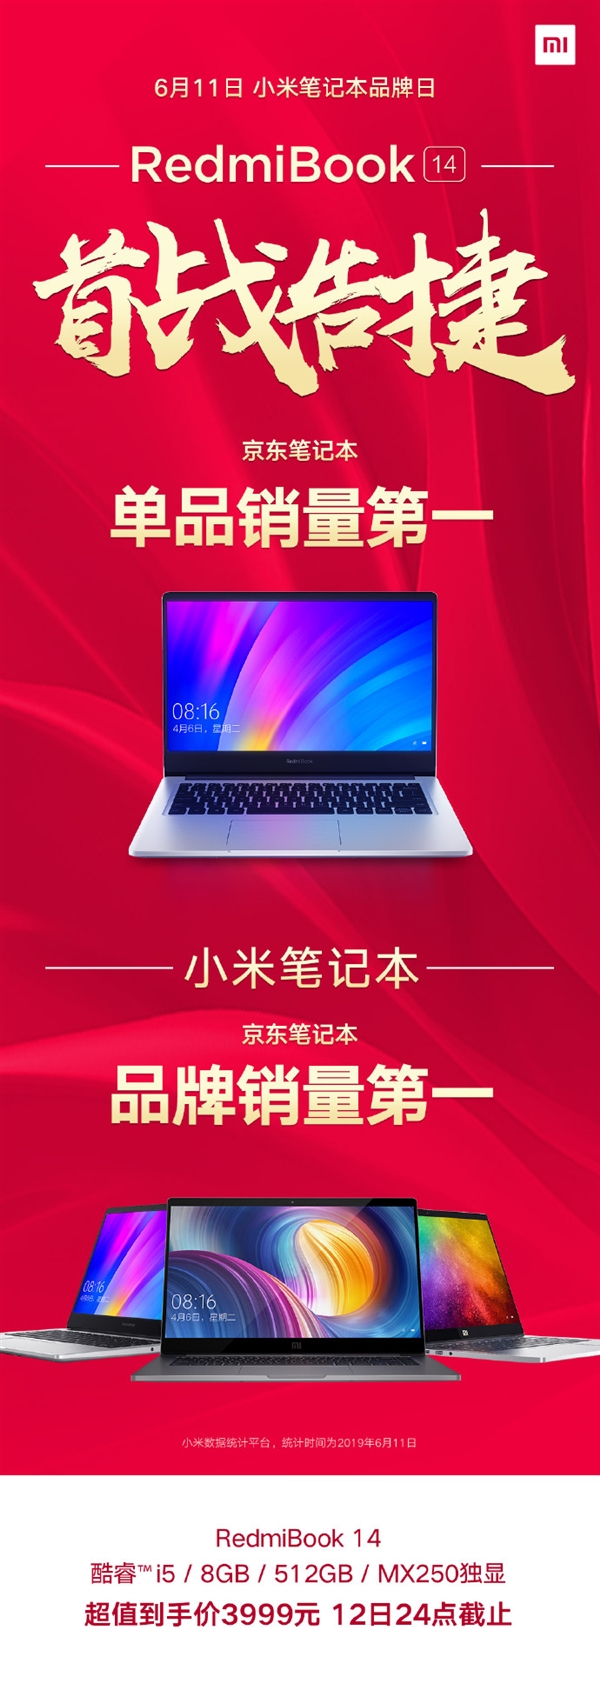 RedmiBook 14首销告捷 小米笔记本夺双冠